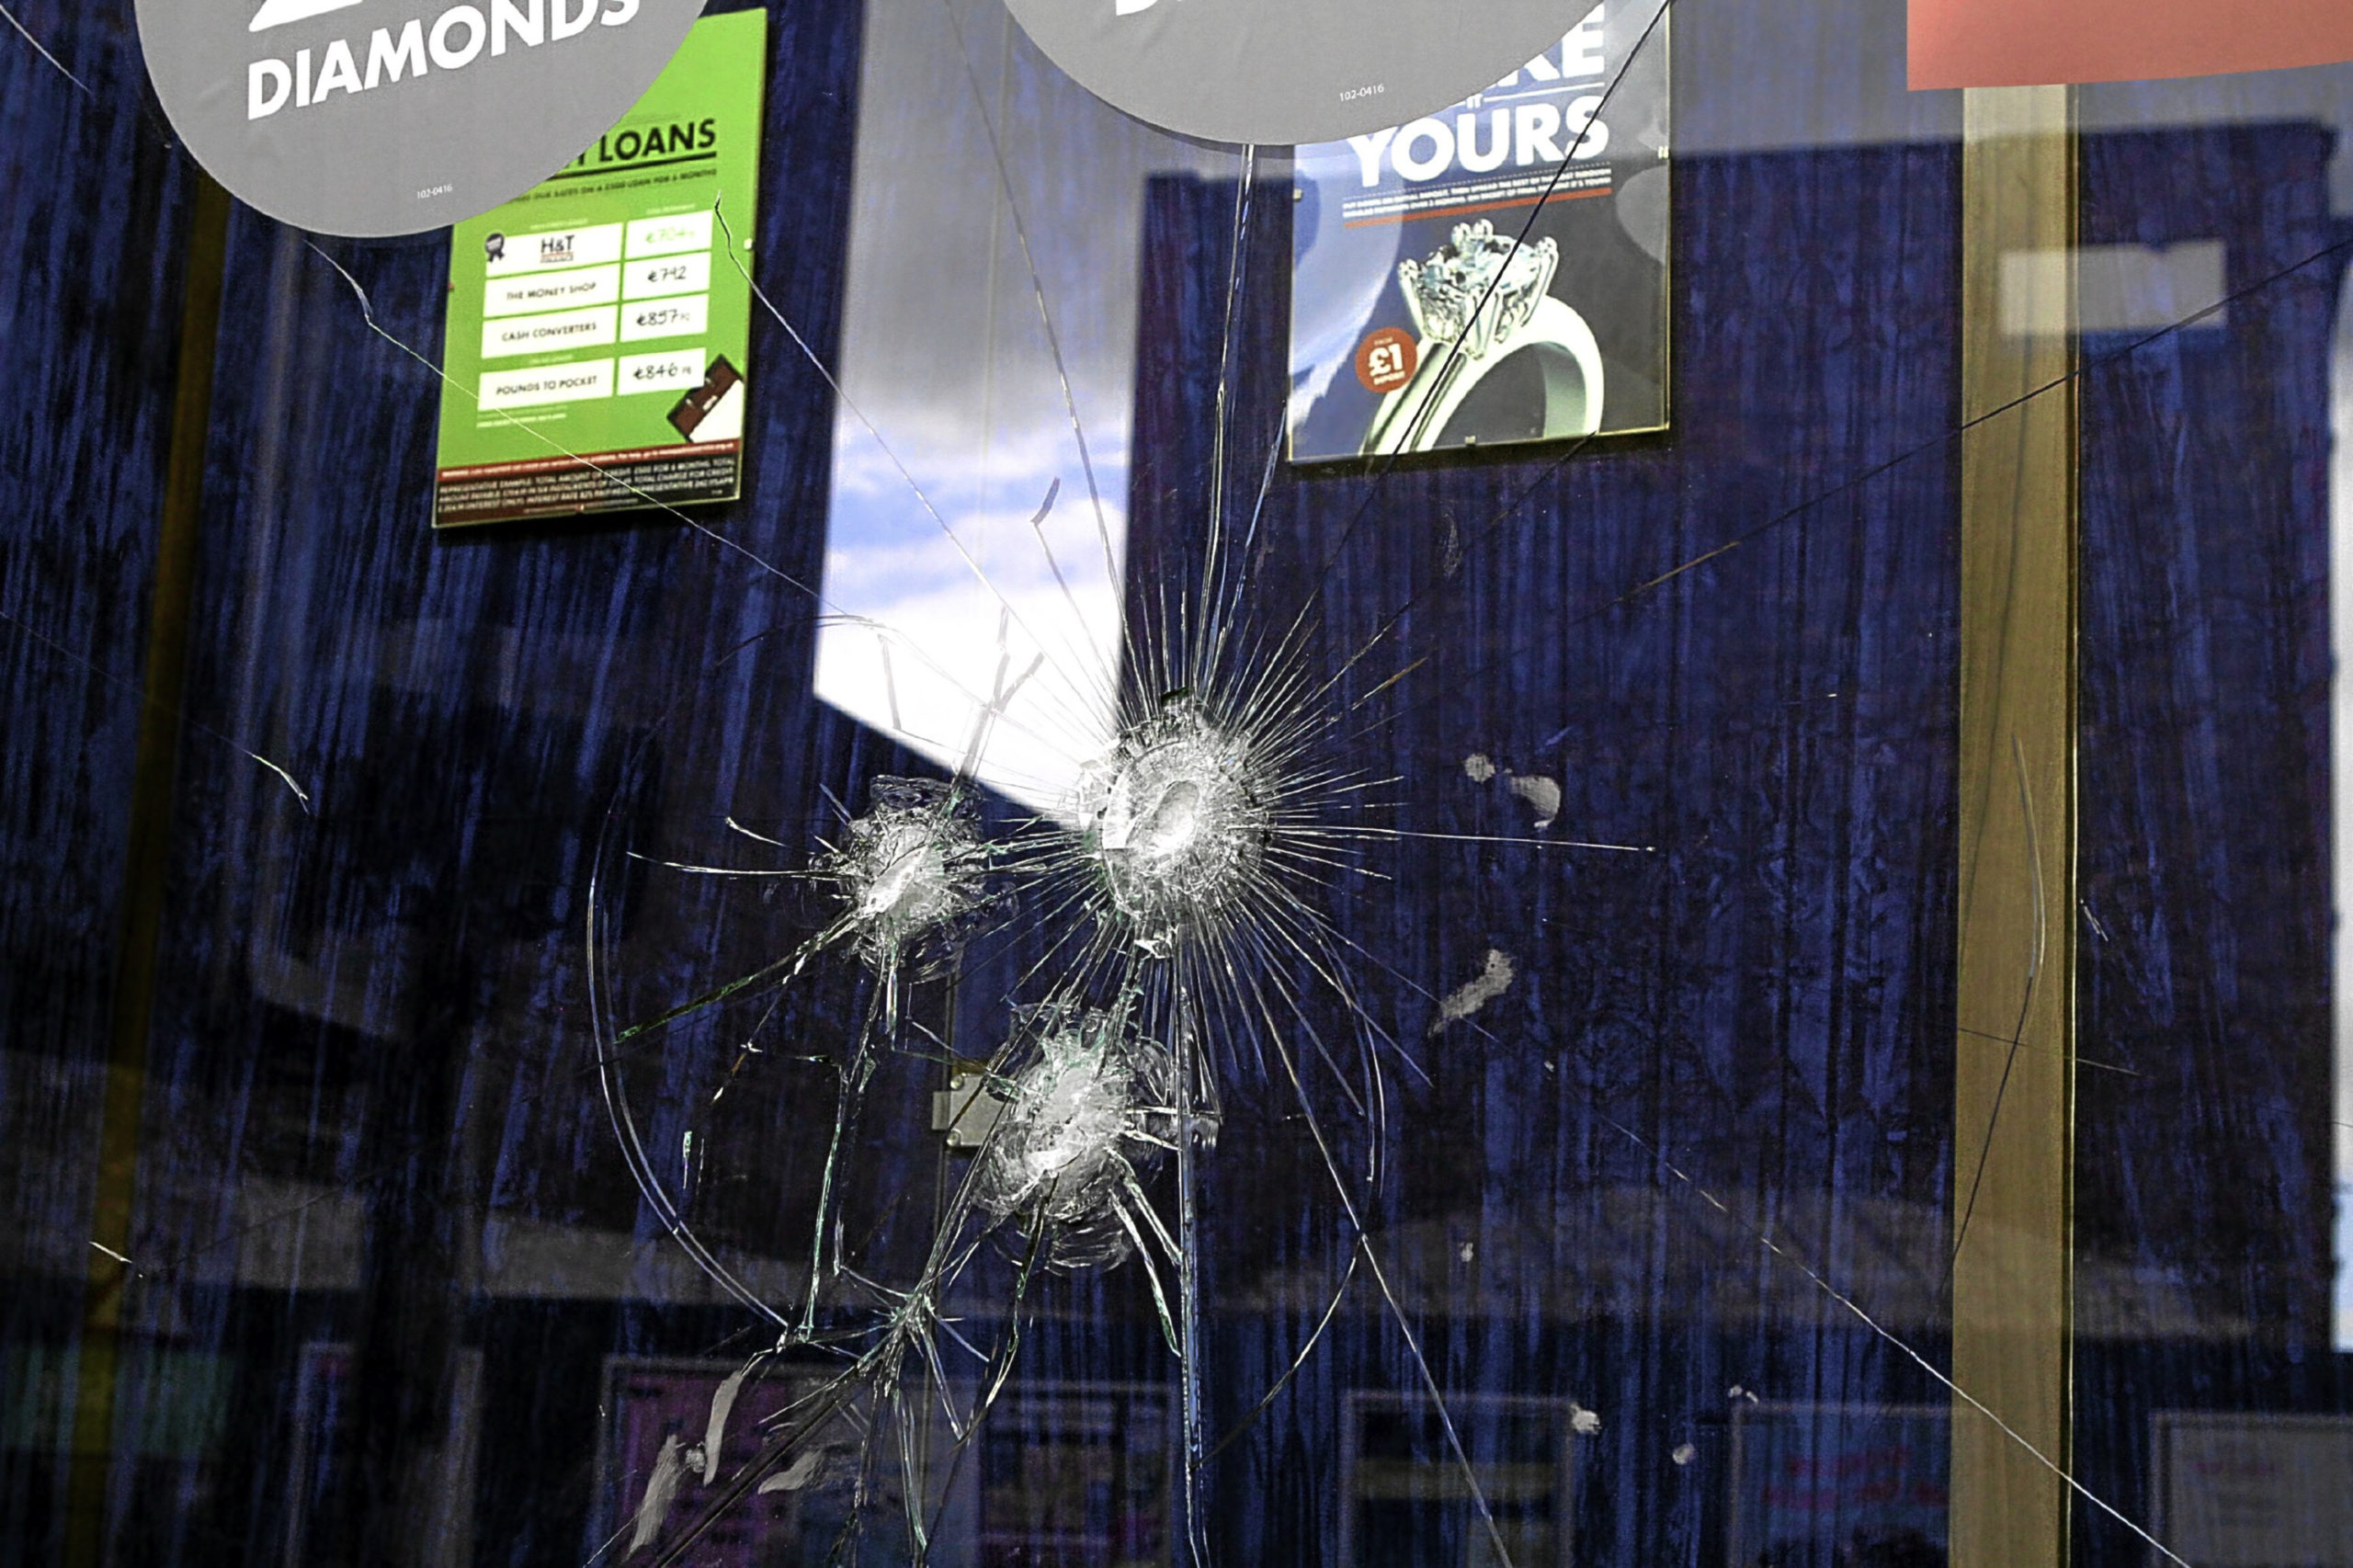 The shop’s damaged window.